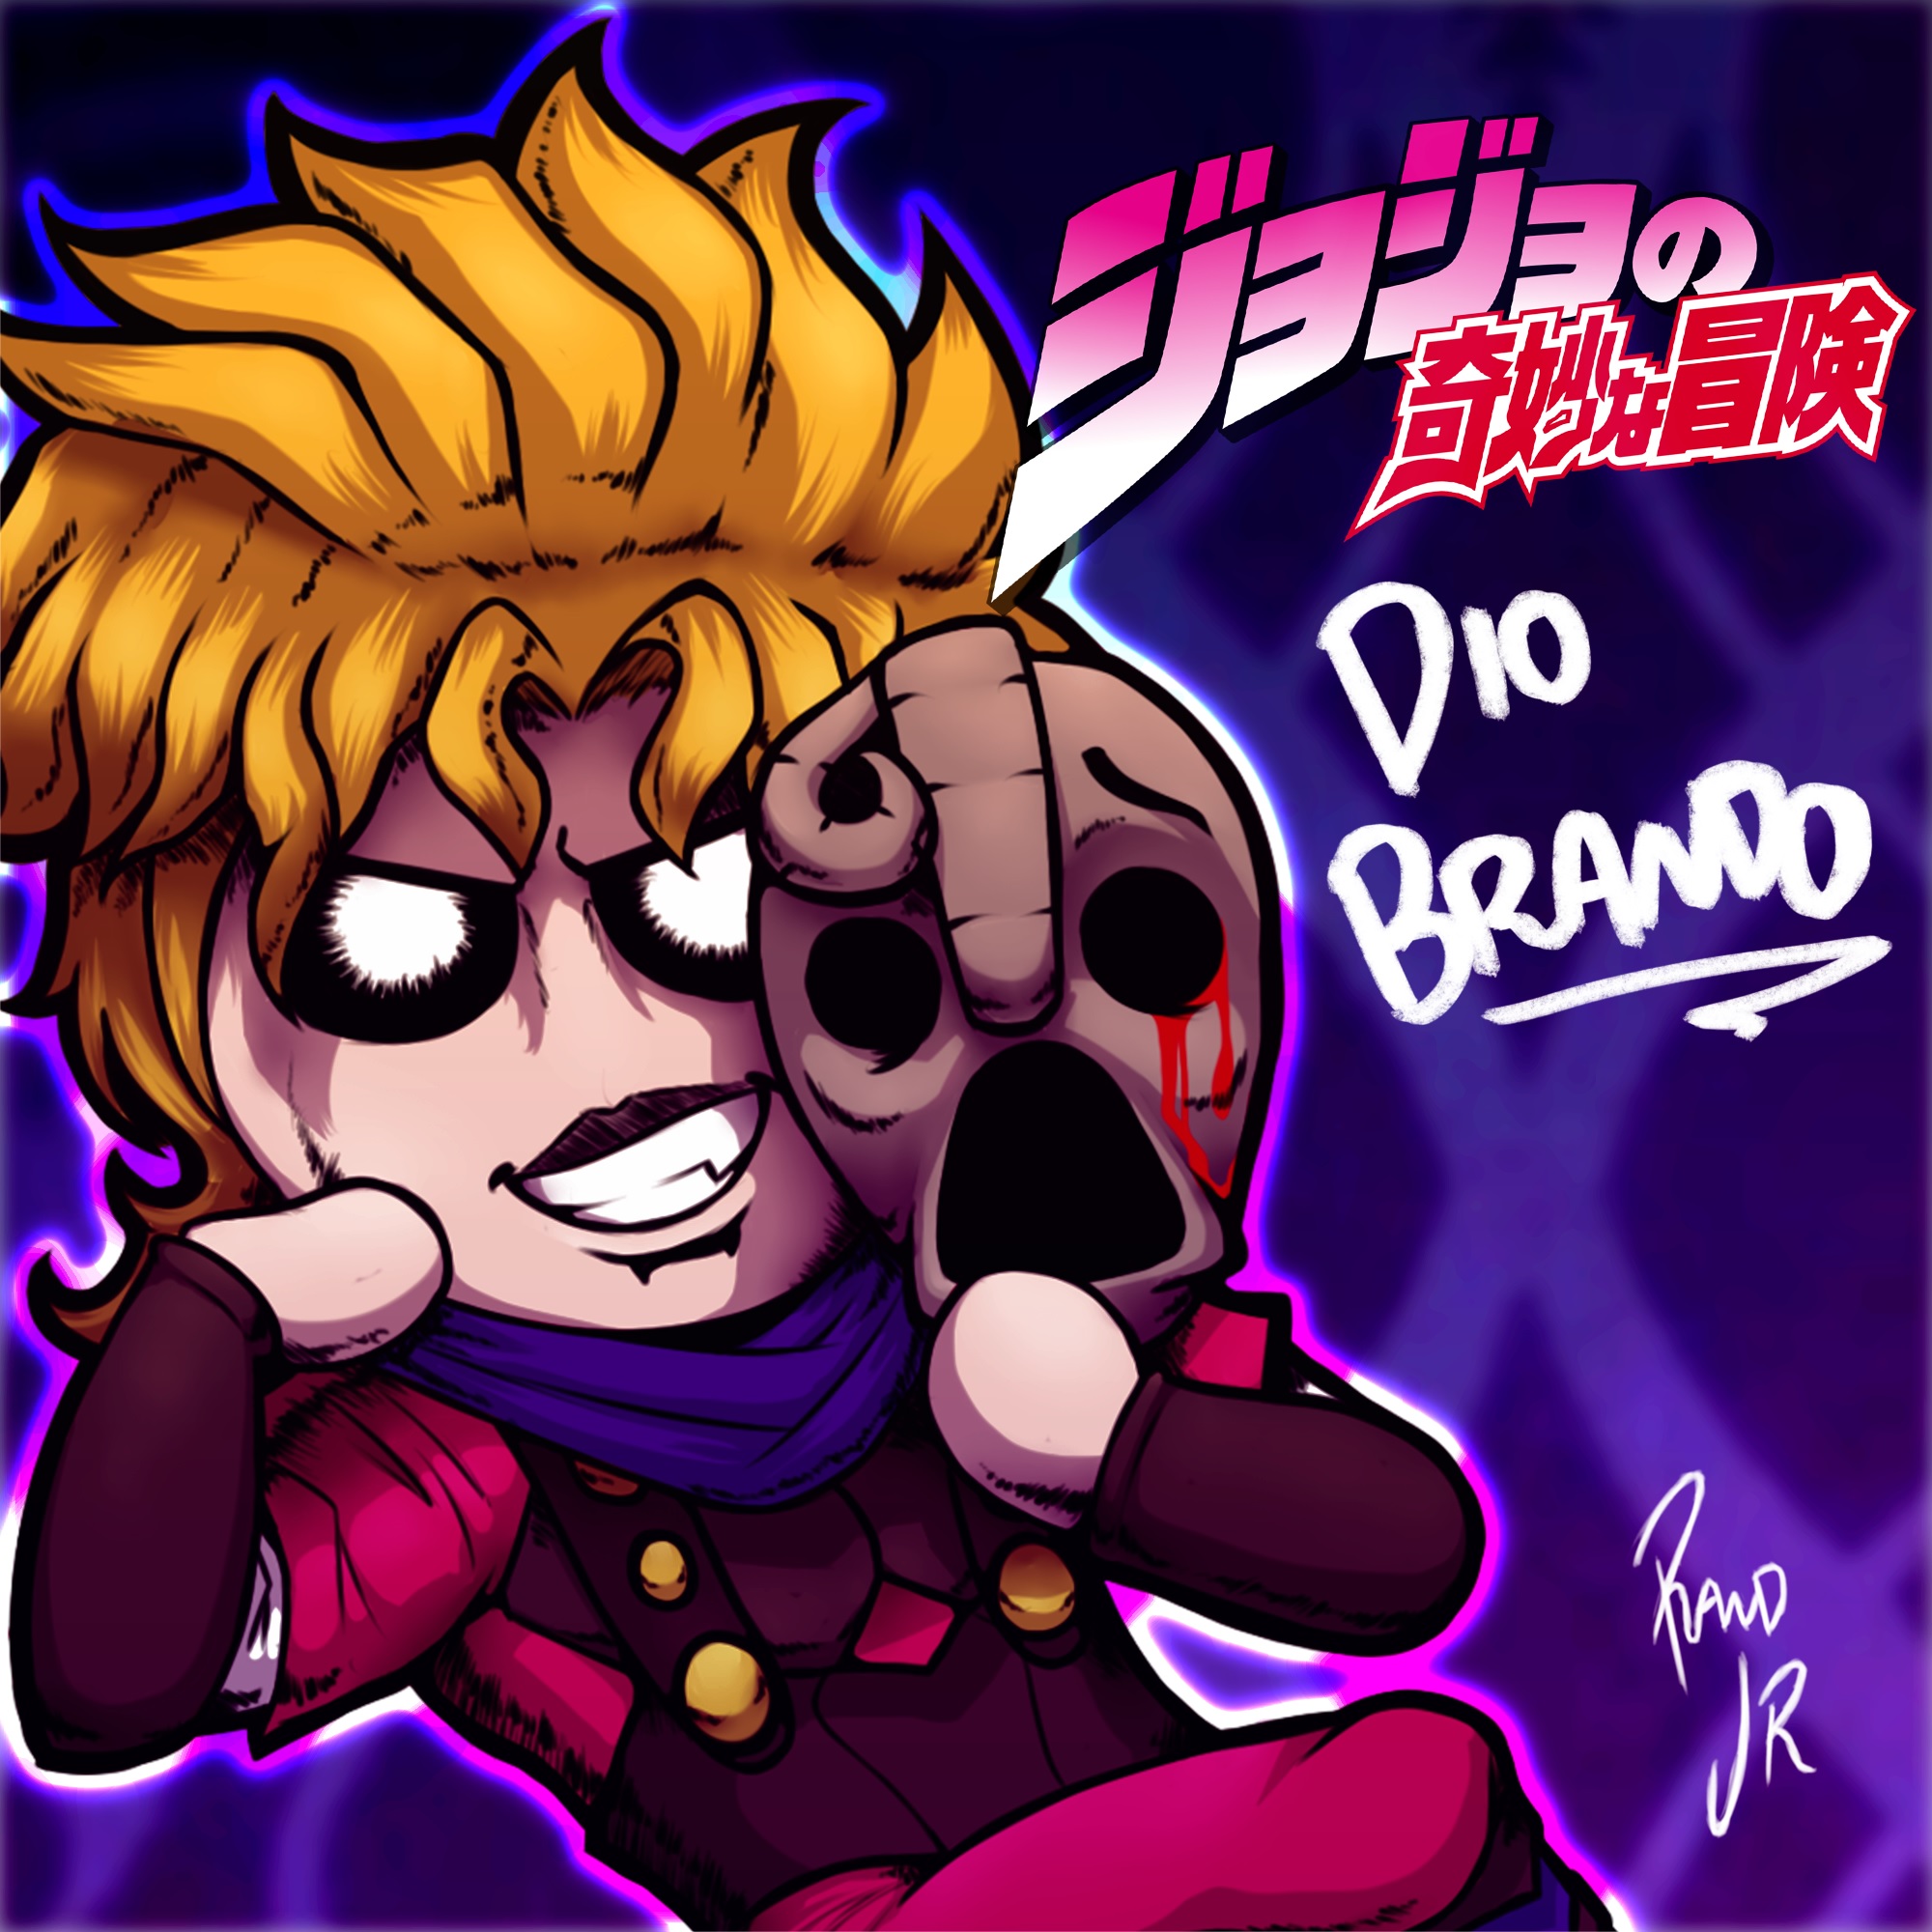 Download Dio Brando, the Iconic Antagonist from JoJo's Bizarre